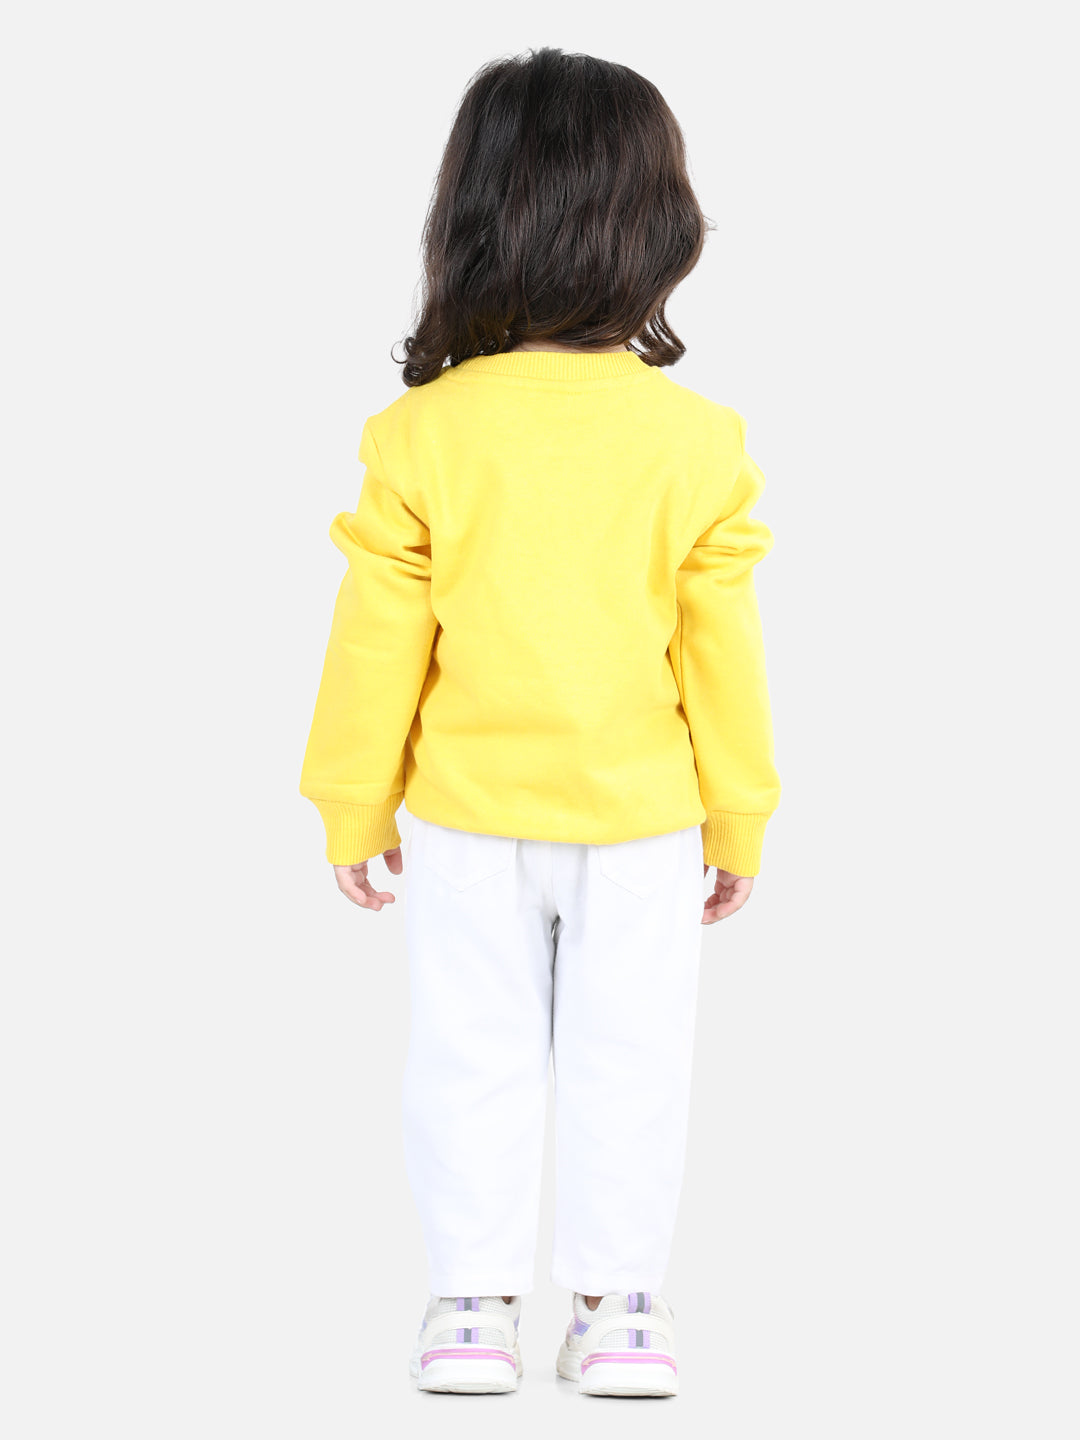 BownBee Full Sleeve Sweatshirt for Girls- Yellow